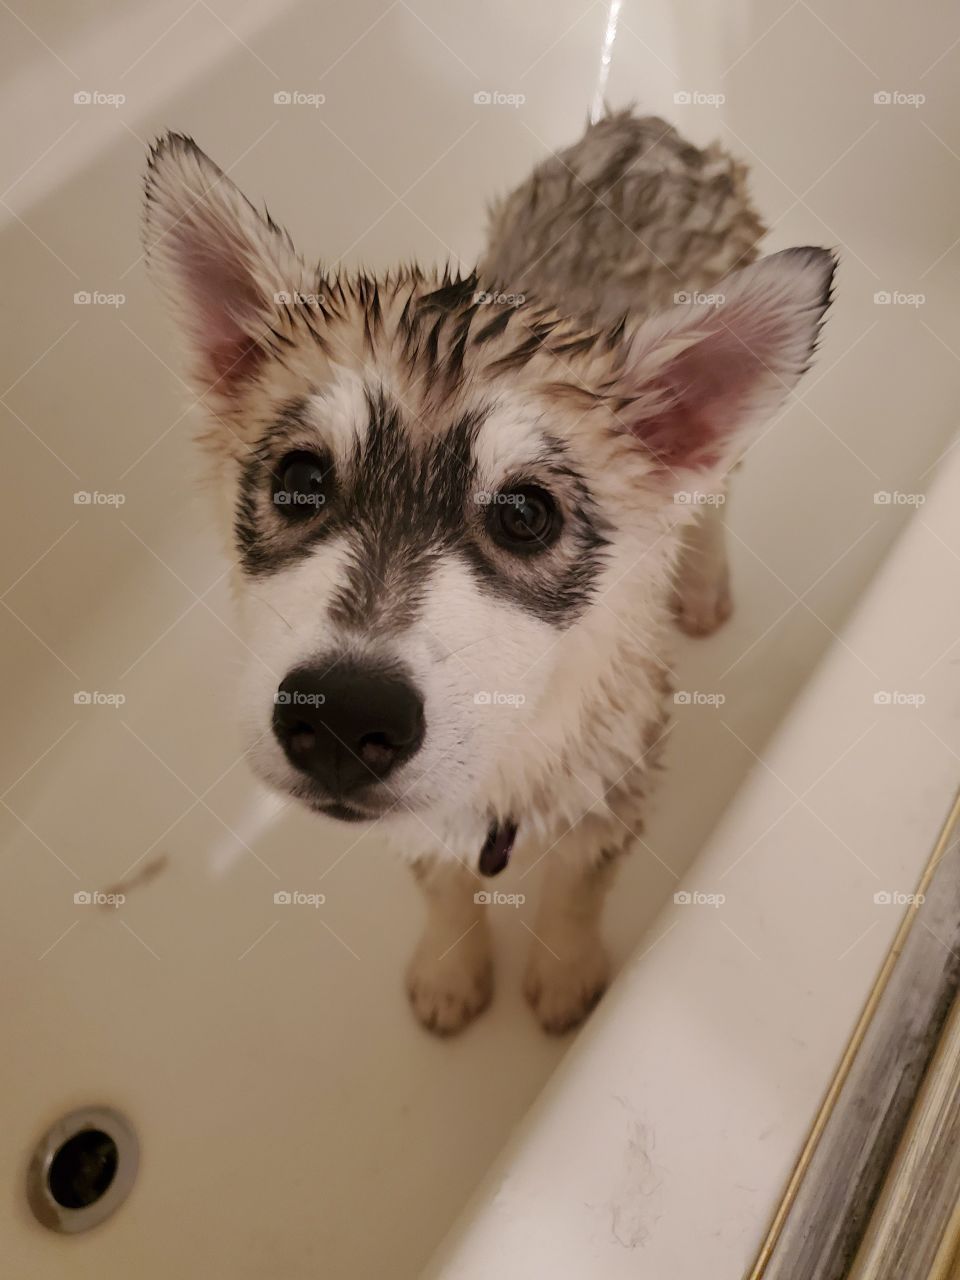 Nyx
AKC Registered Siberian Husky
Bathtime!
Insta: howling_winds_siberians